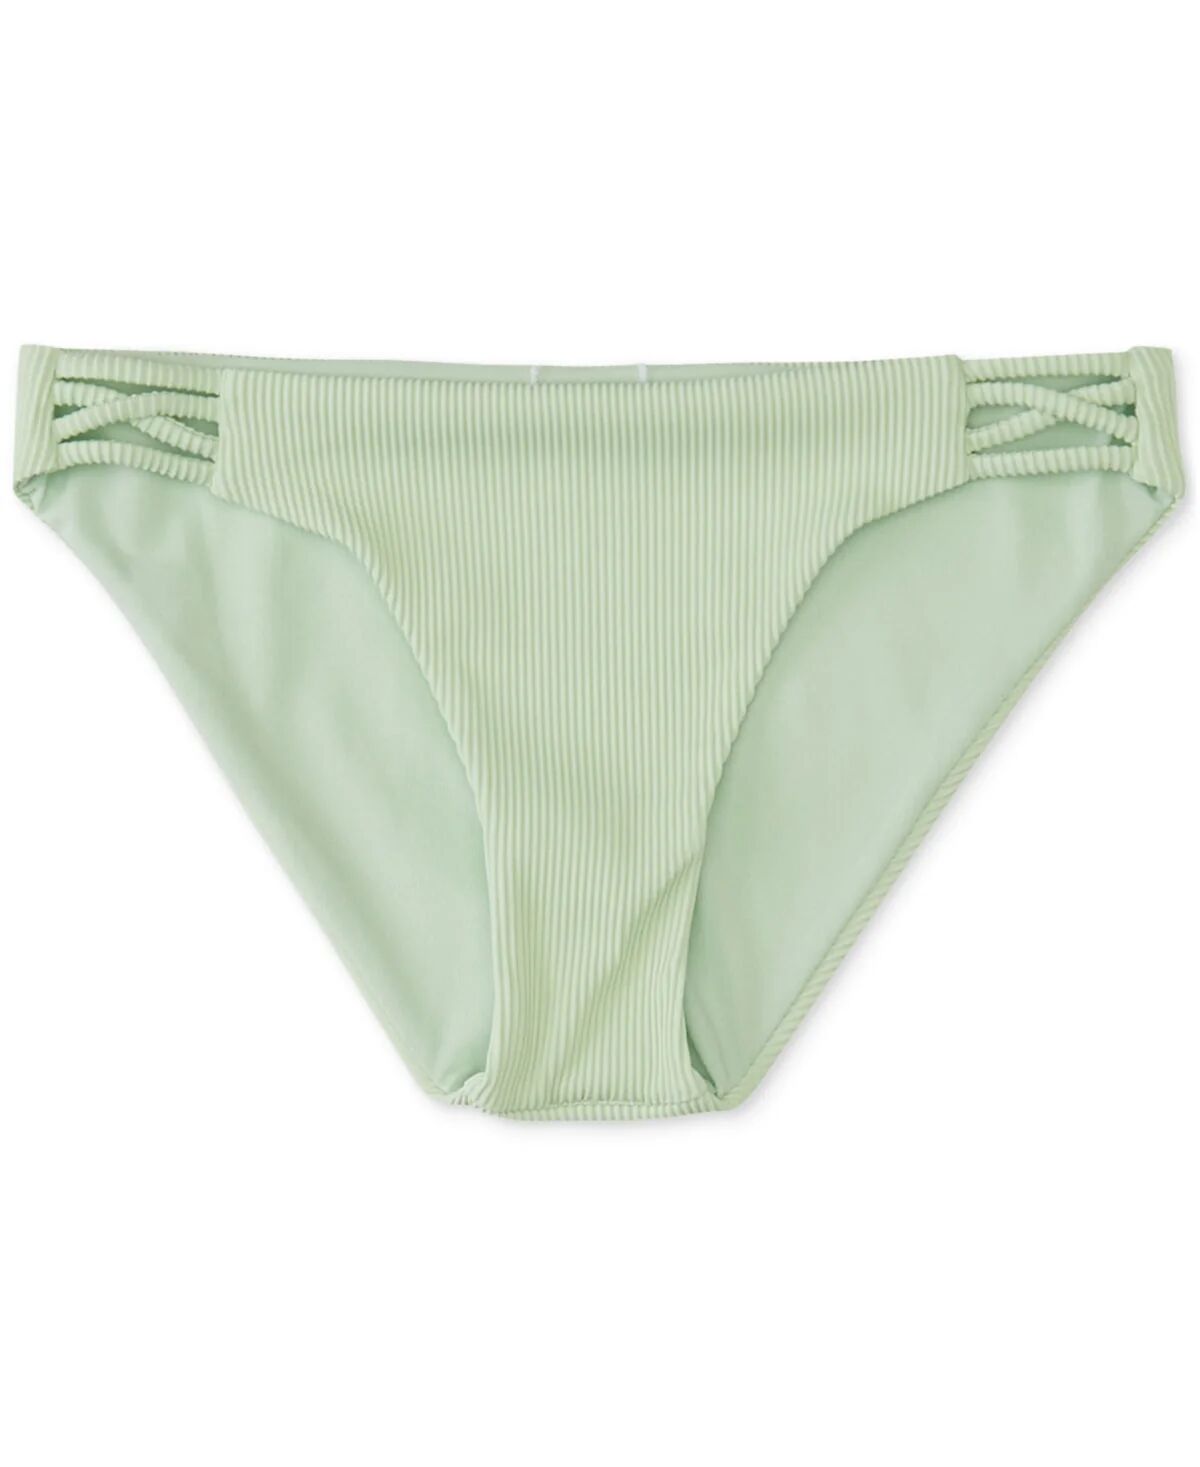 Roxy Junior's Active Bikini Bottoms Swimsuit Green Size X-Small